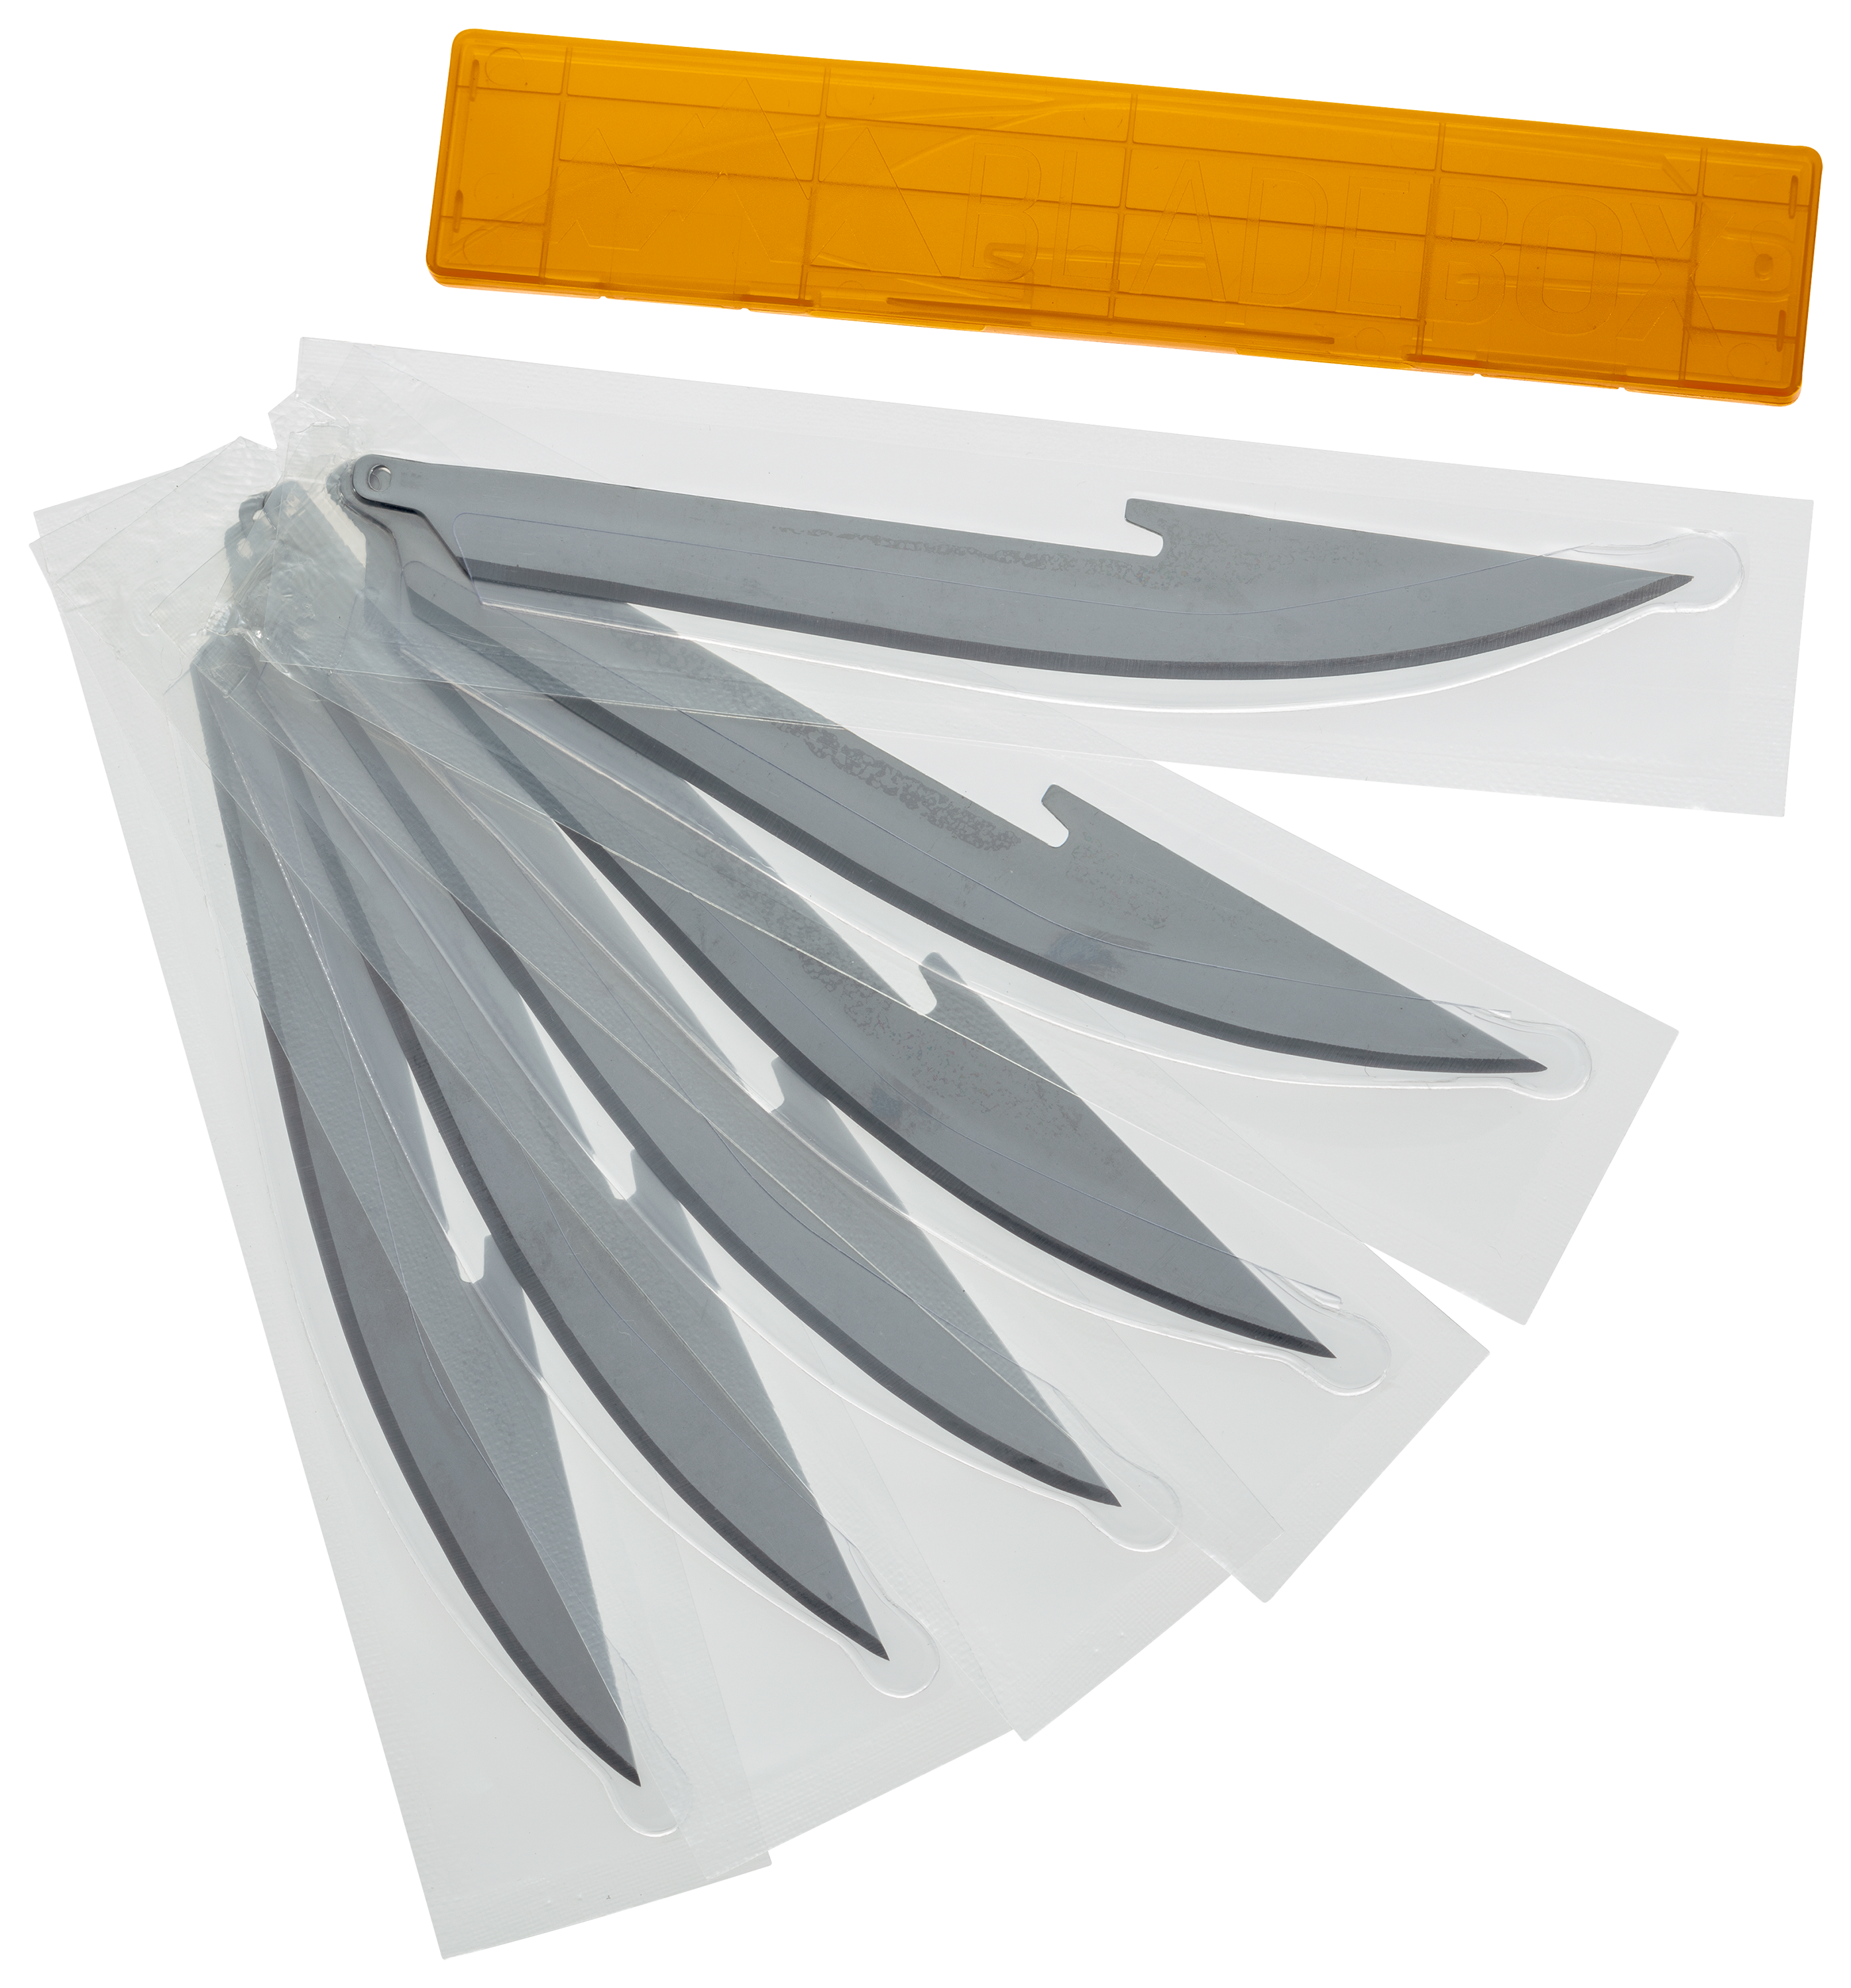 Outdoor Edge Razor Edge RazorSafe Boning/Fillet Knife Replacement Blades